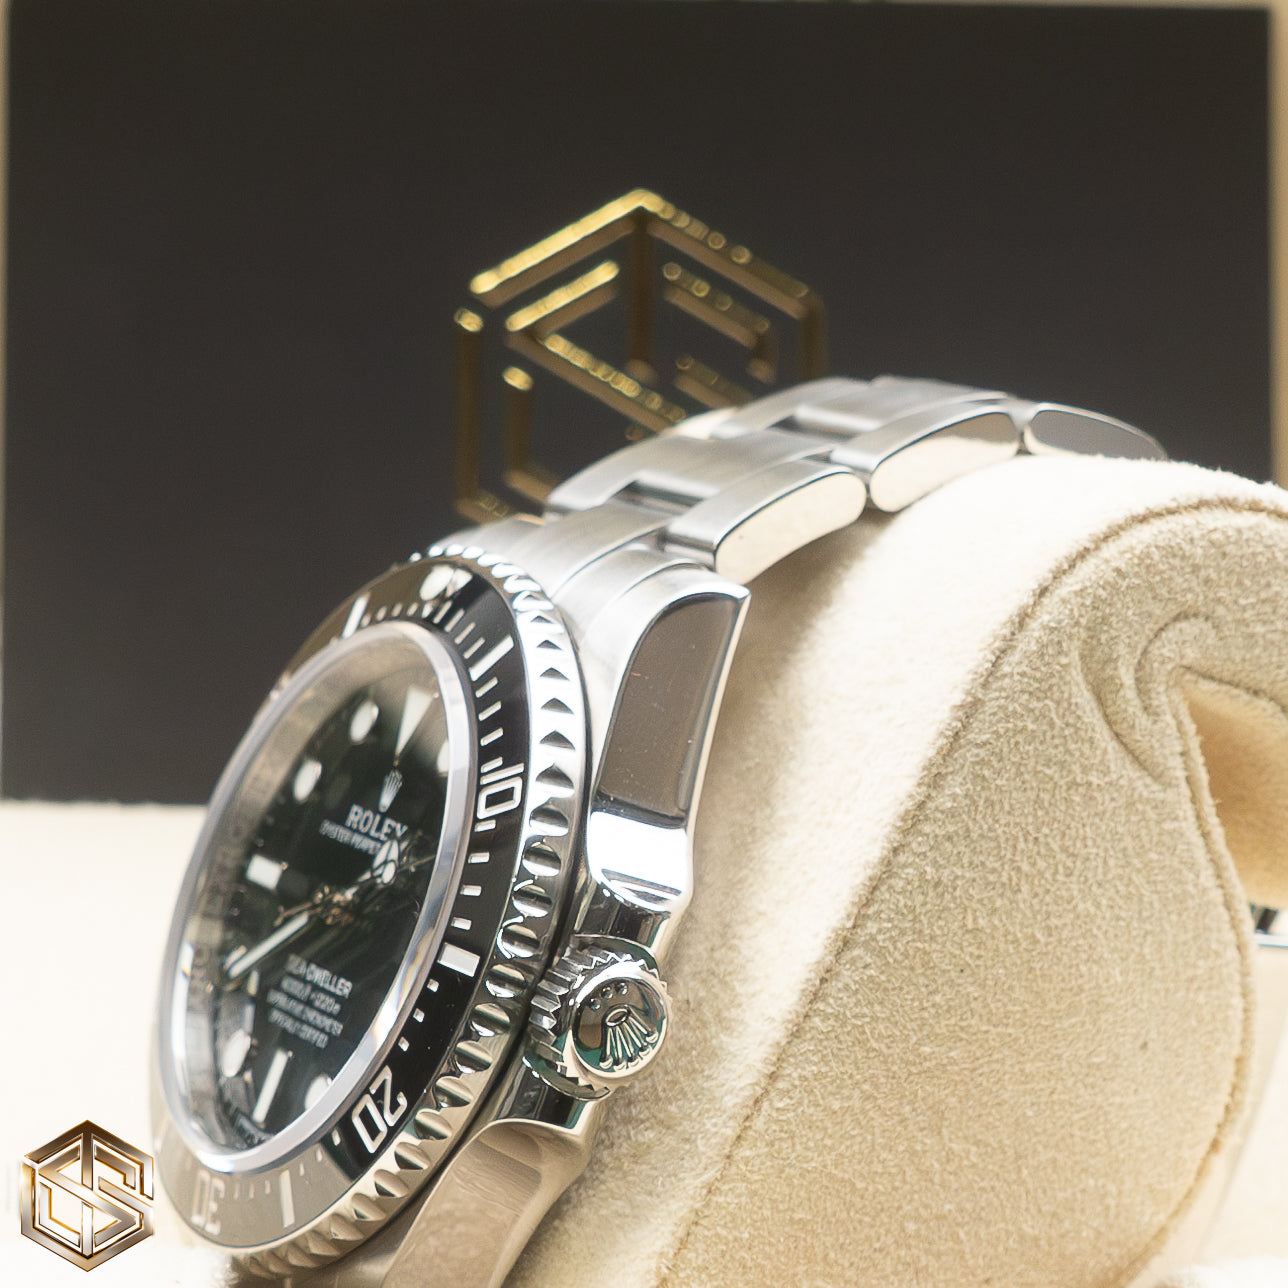 Rolex 116600 Sea-Dweller 4000 40mm Black Dial 2016 Full Set Watch